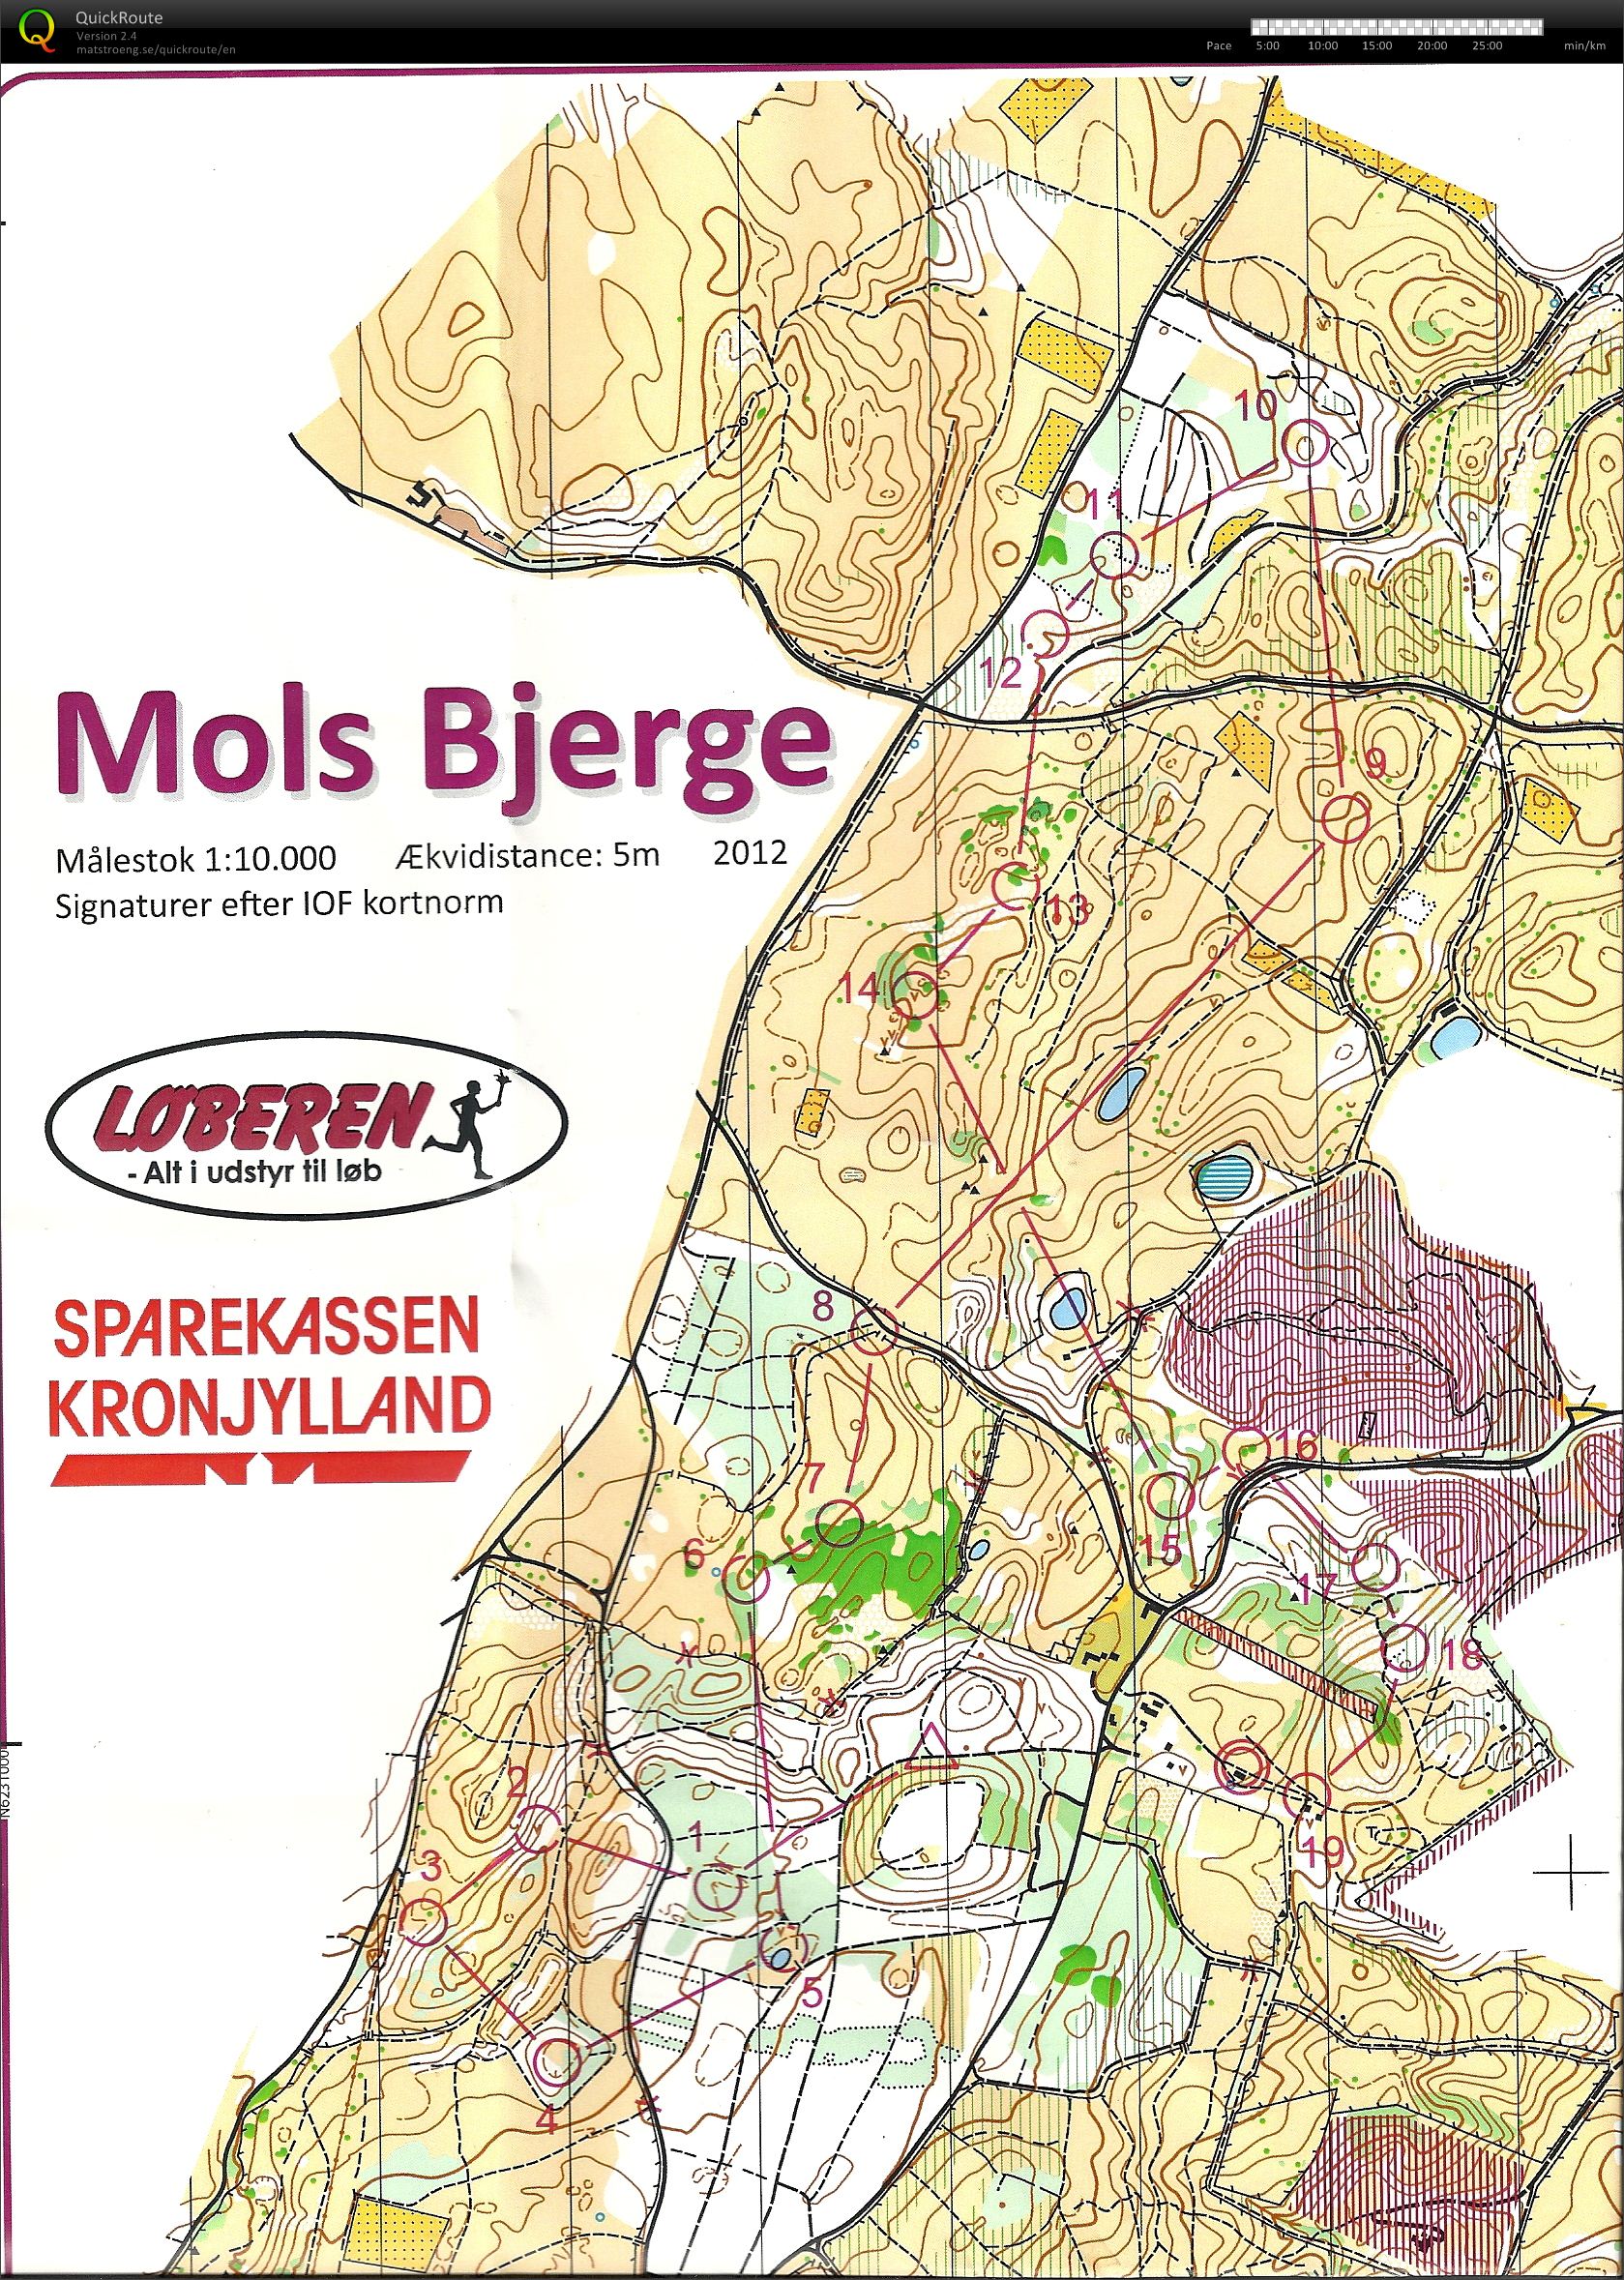 Mols Bjerge, JFM Lang, D45, LeneSN (19.08.2012)